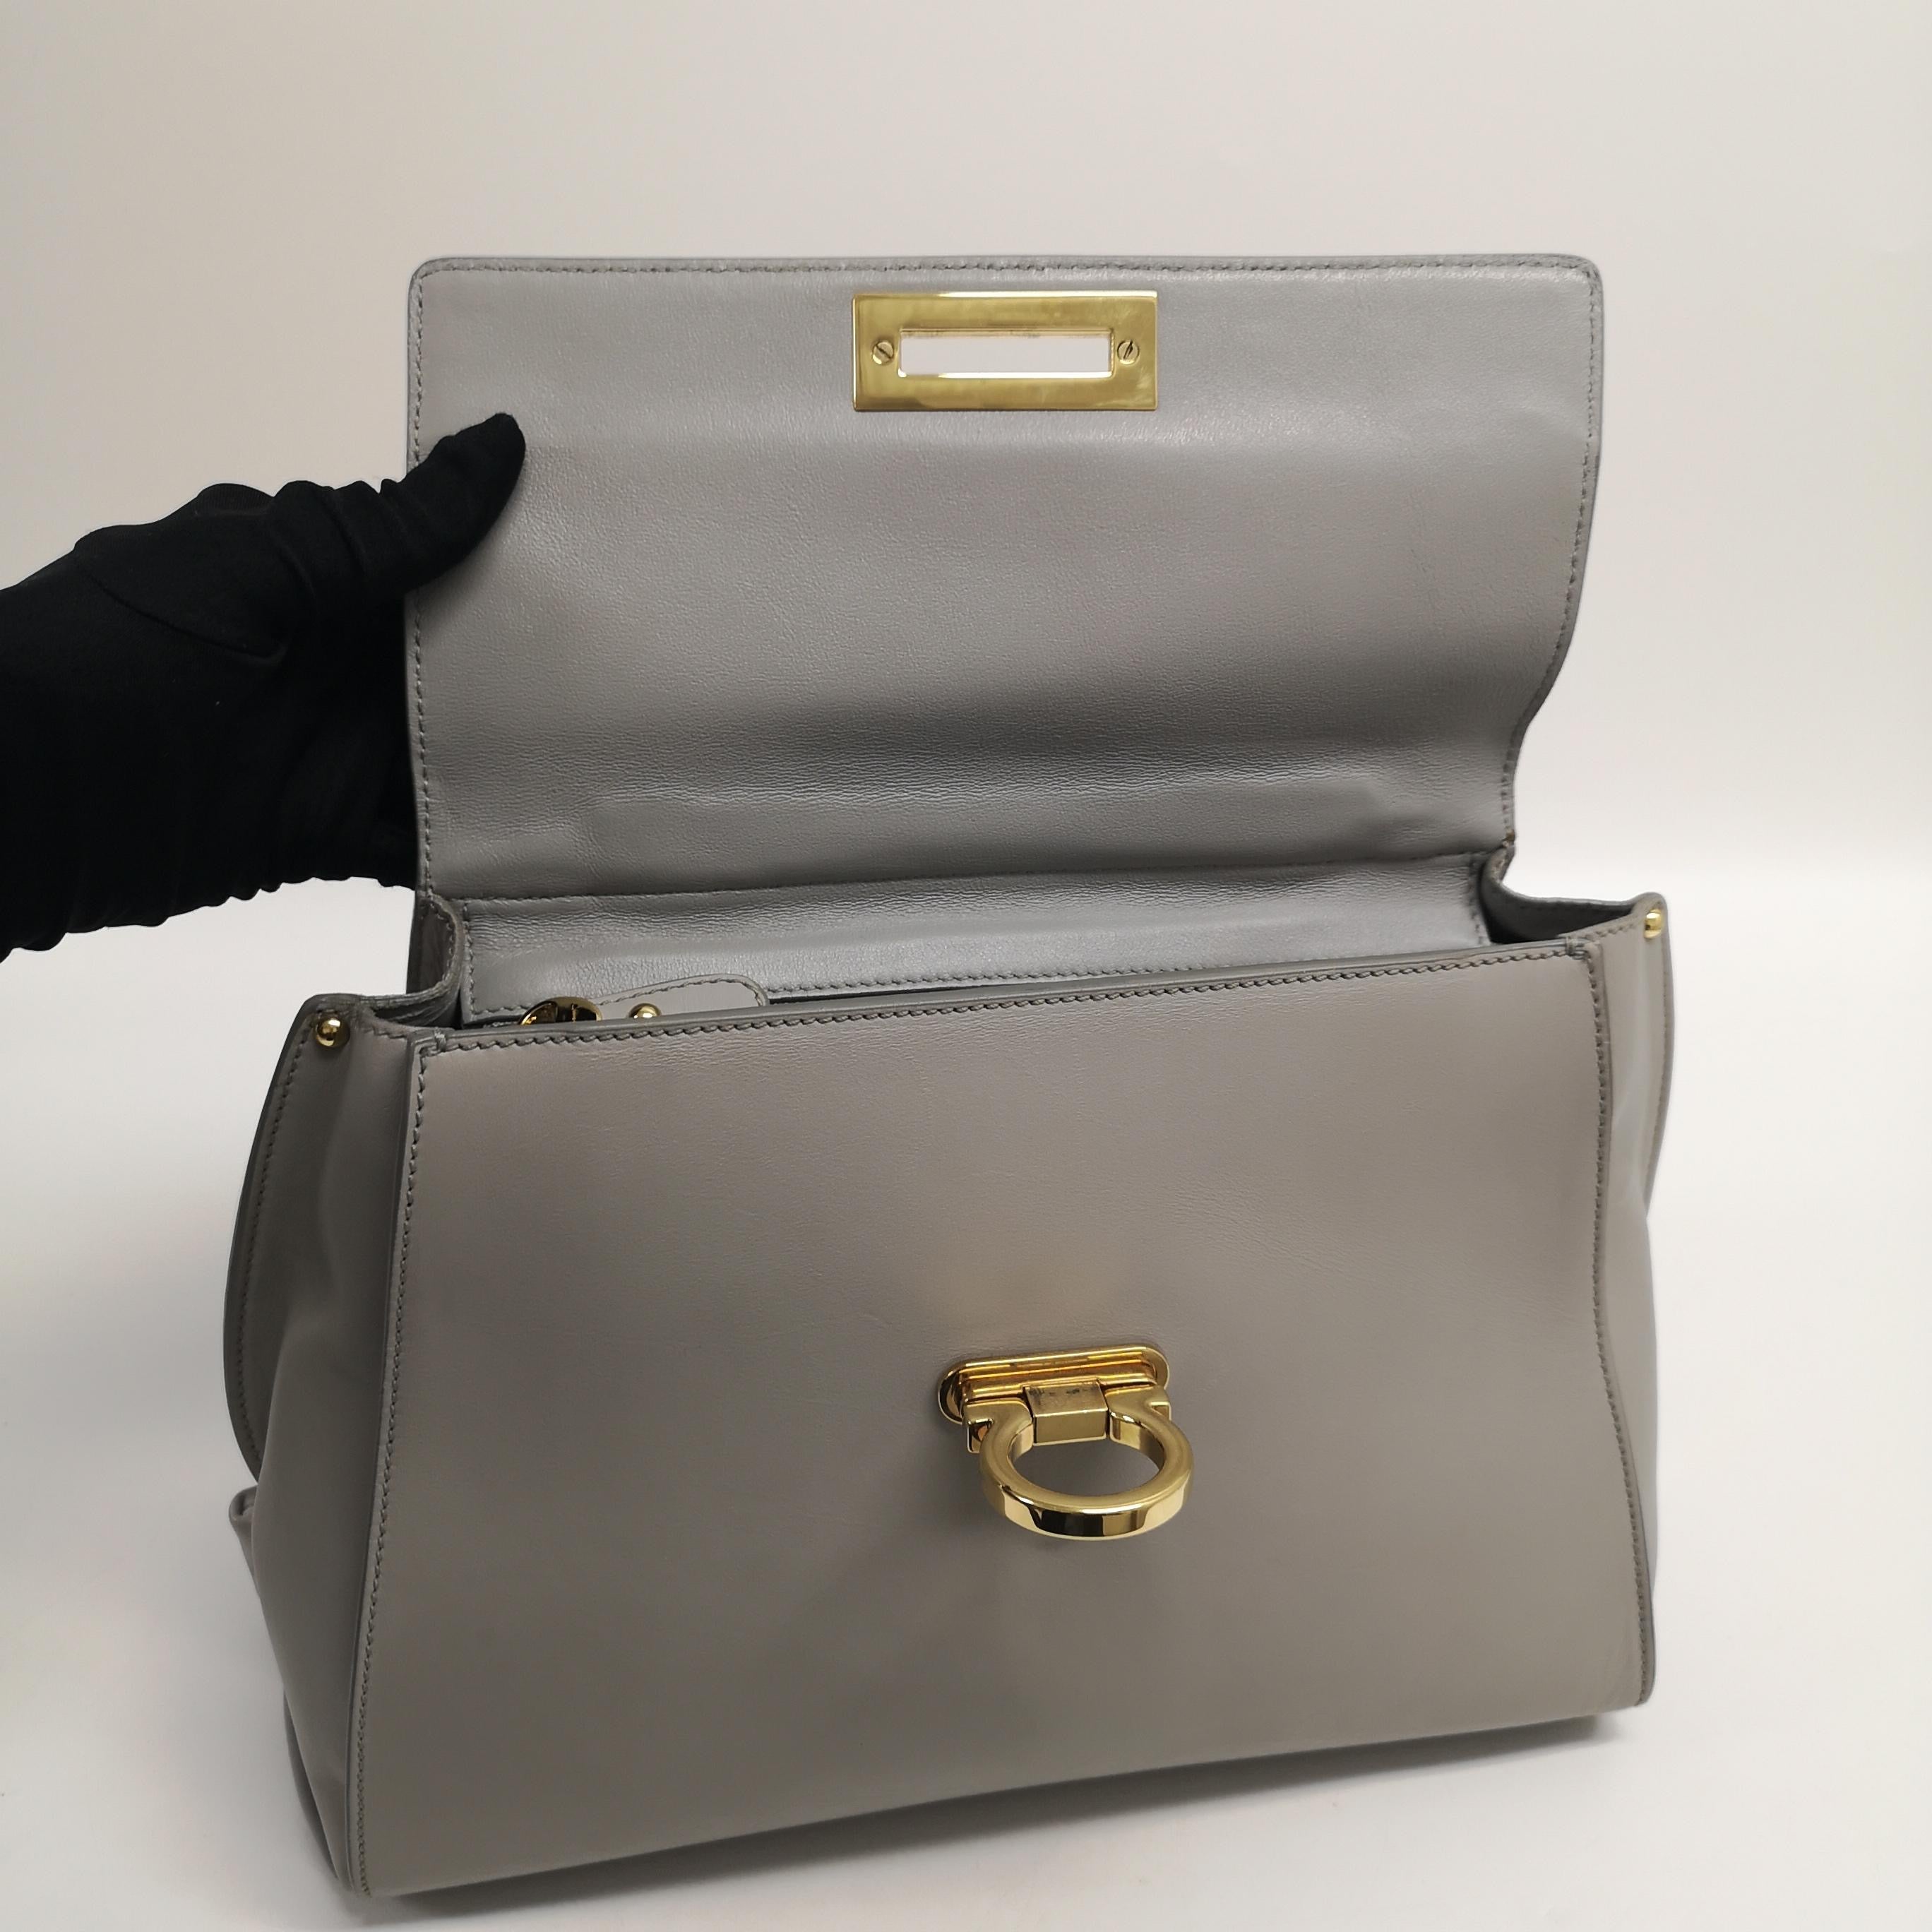 Leather Sofia Handbag